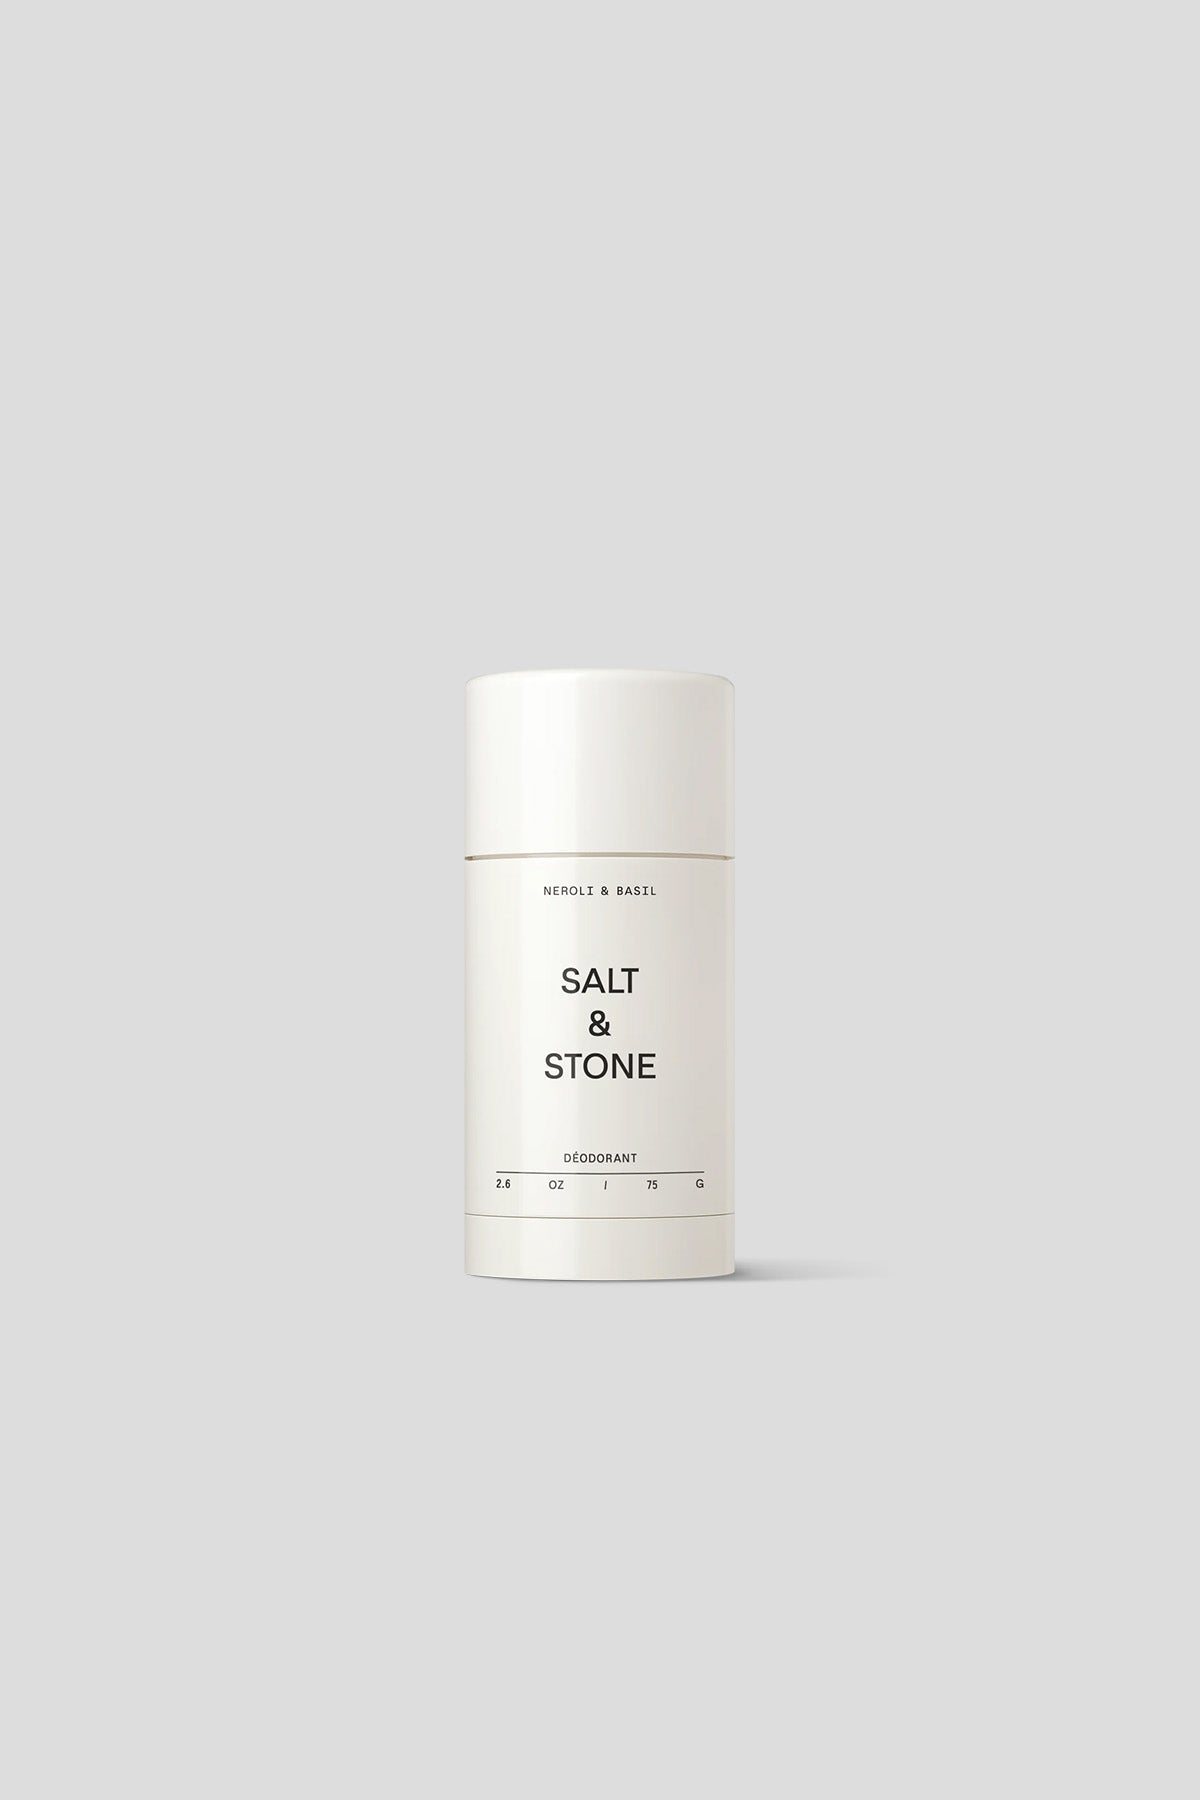 salt & stone - DÉODORANT NATUREL NÉROLI ET BASILIC - LE LABO STORE